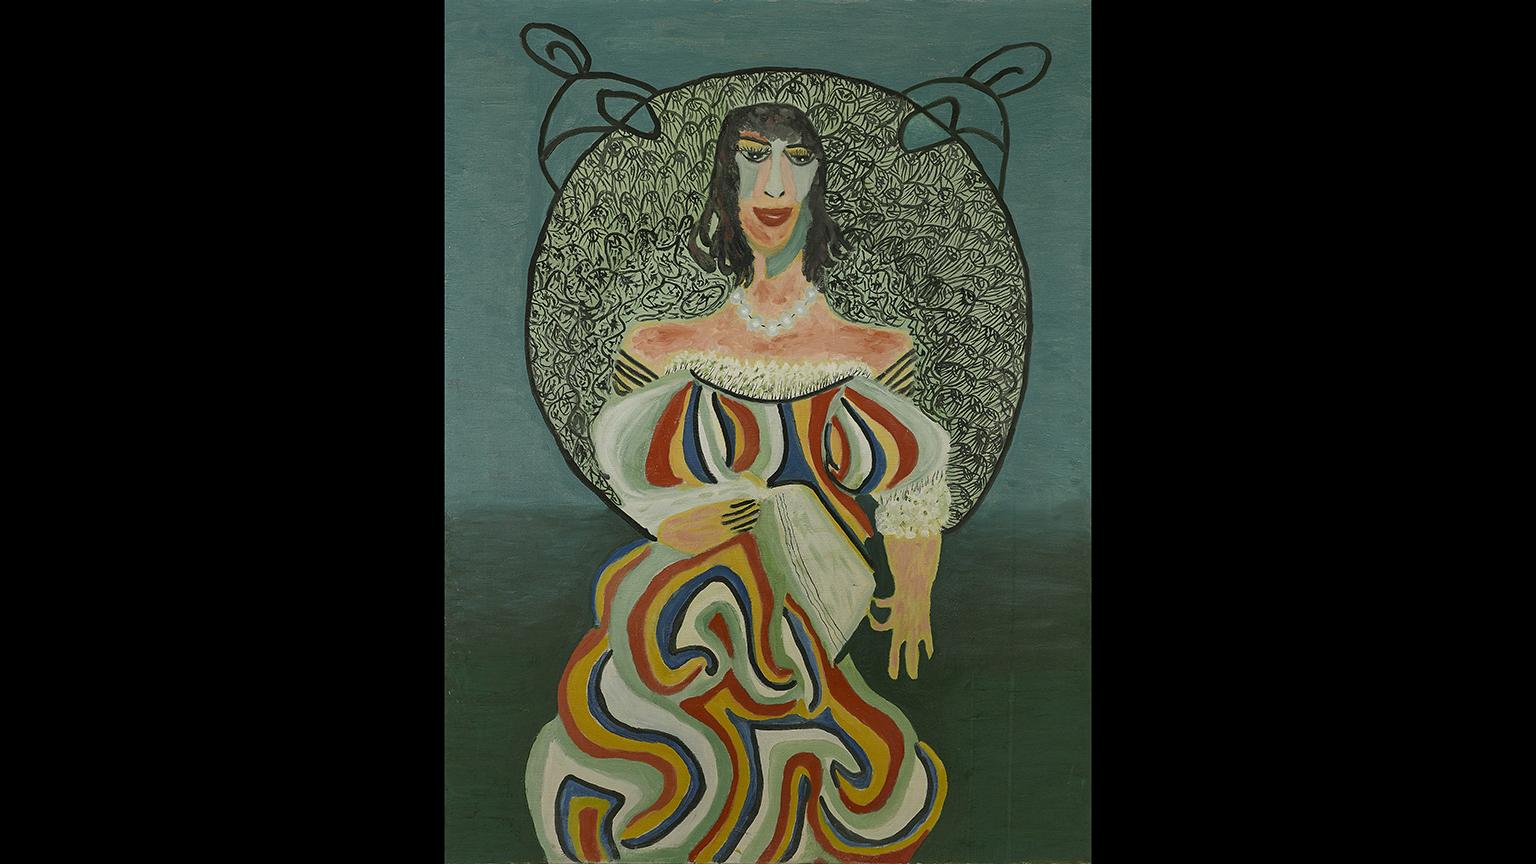 Pauline Simon (American, 1898-1976), “Untitled (woman with book),” 1968. Collection of Karl Wirsum and Lorri Gunn.